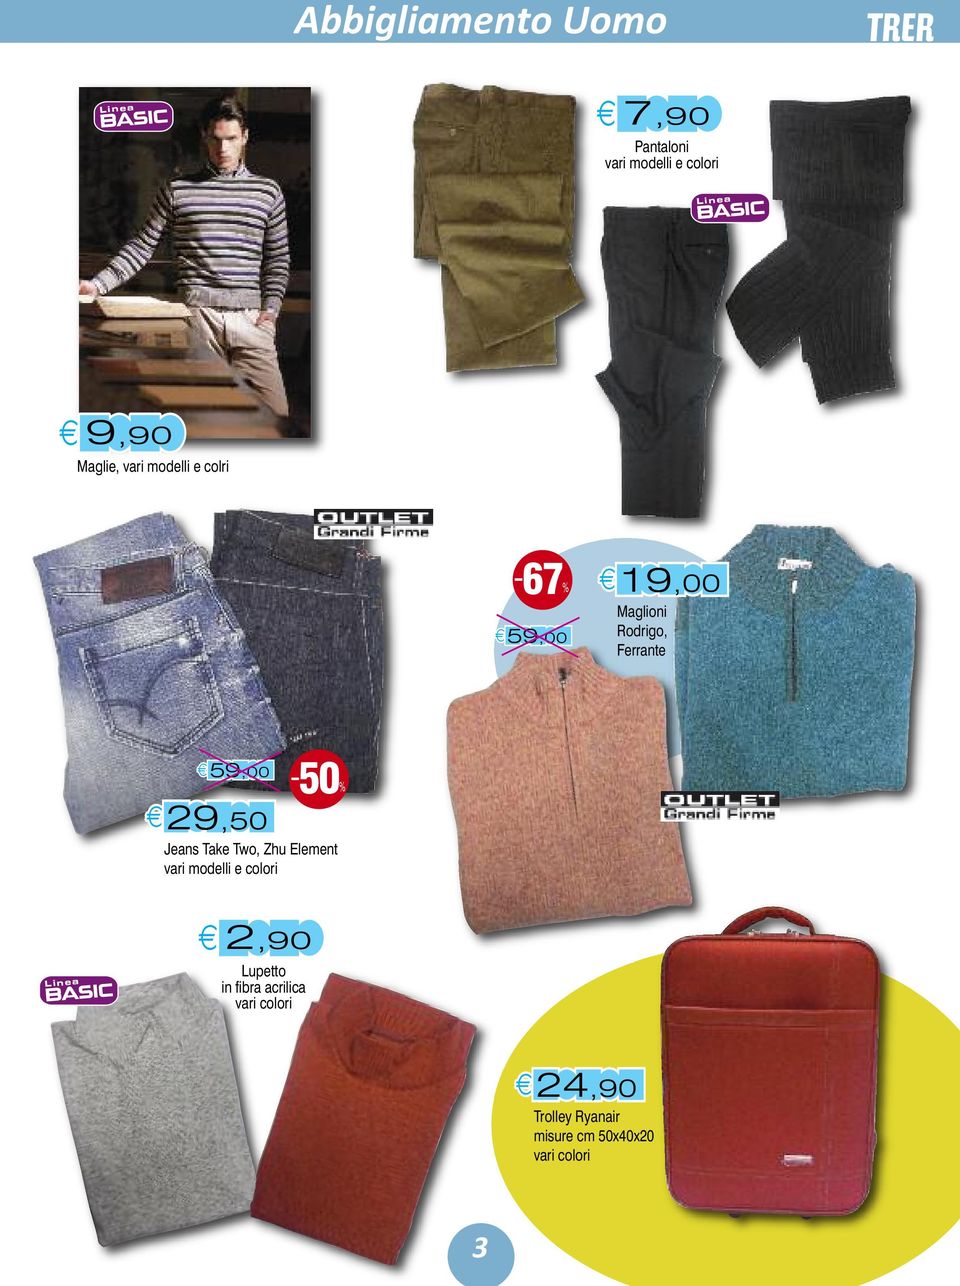 59,00 29,50 Jeans Take Two, Zhu Element vari modelli e colori